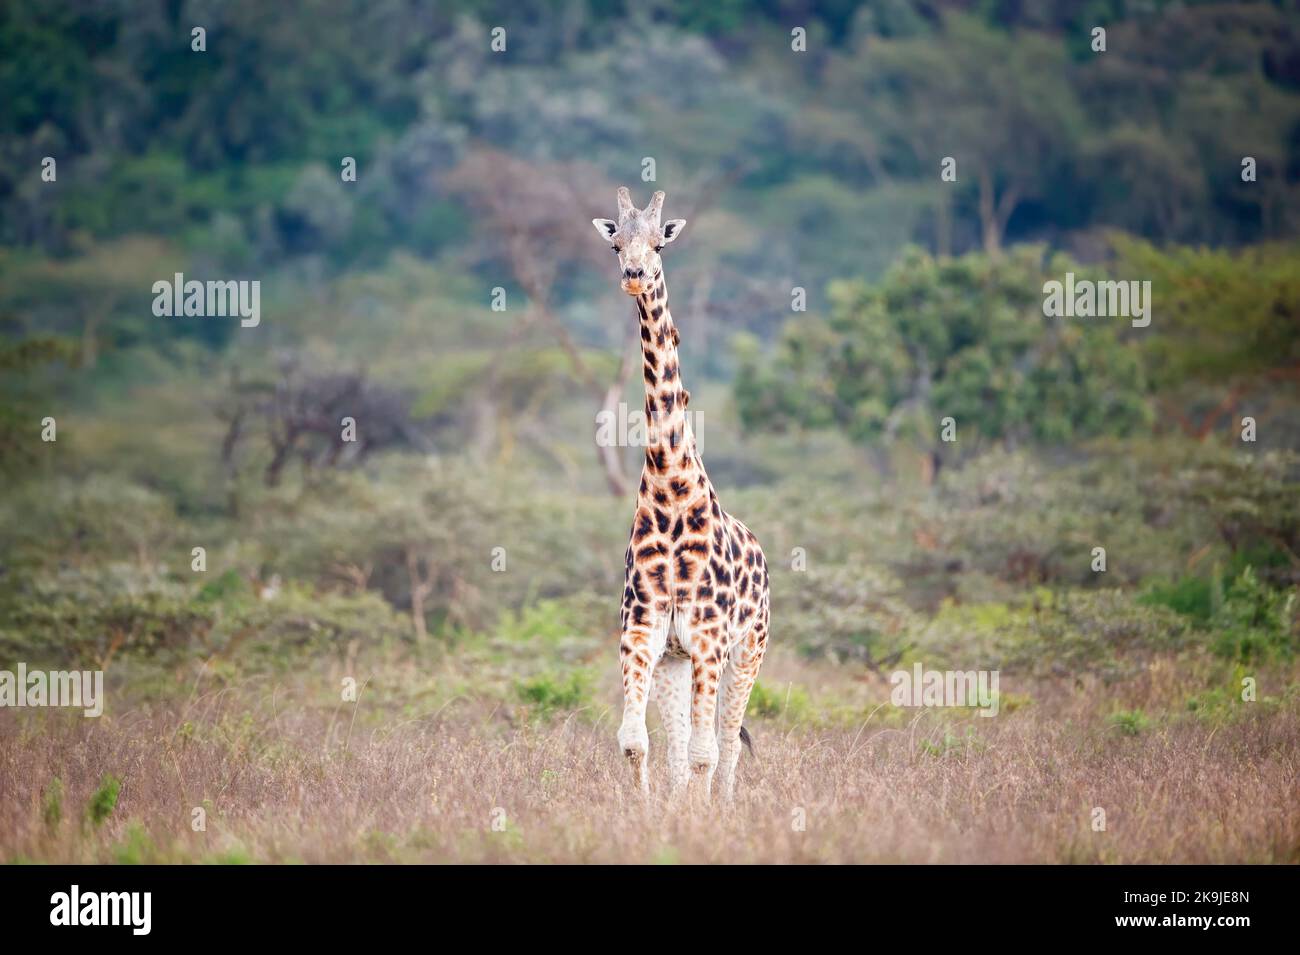 A Rothchild's giraffe at Lake Nakuru in Kenya. Stock Photo